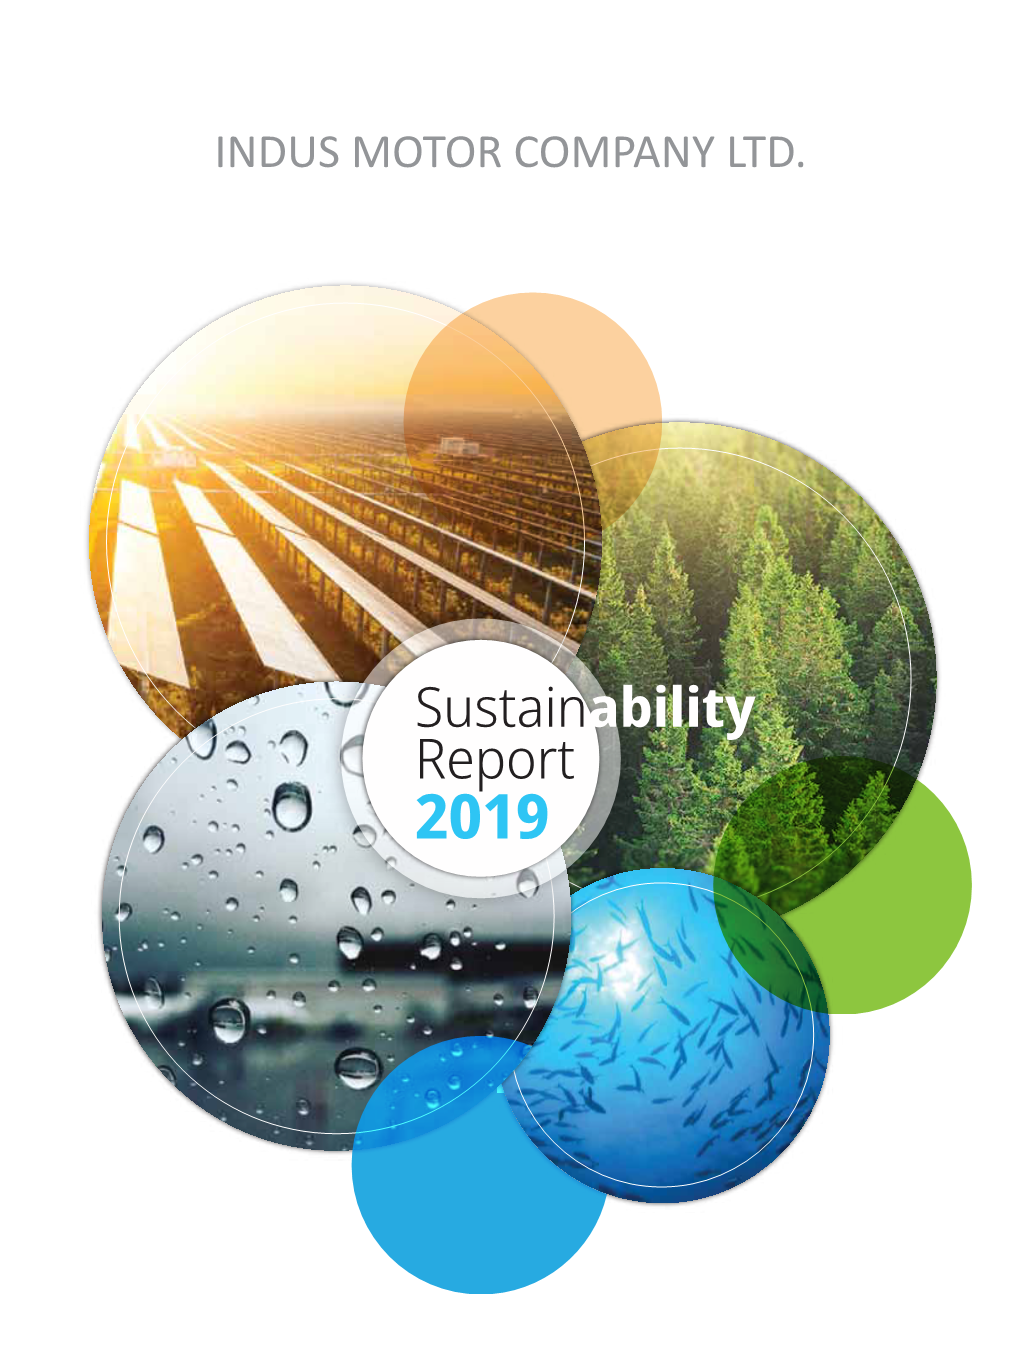 IMC Sustainability Report 2019